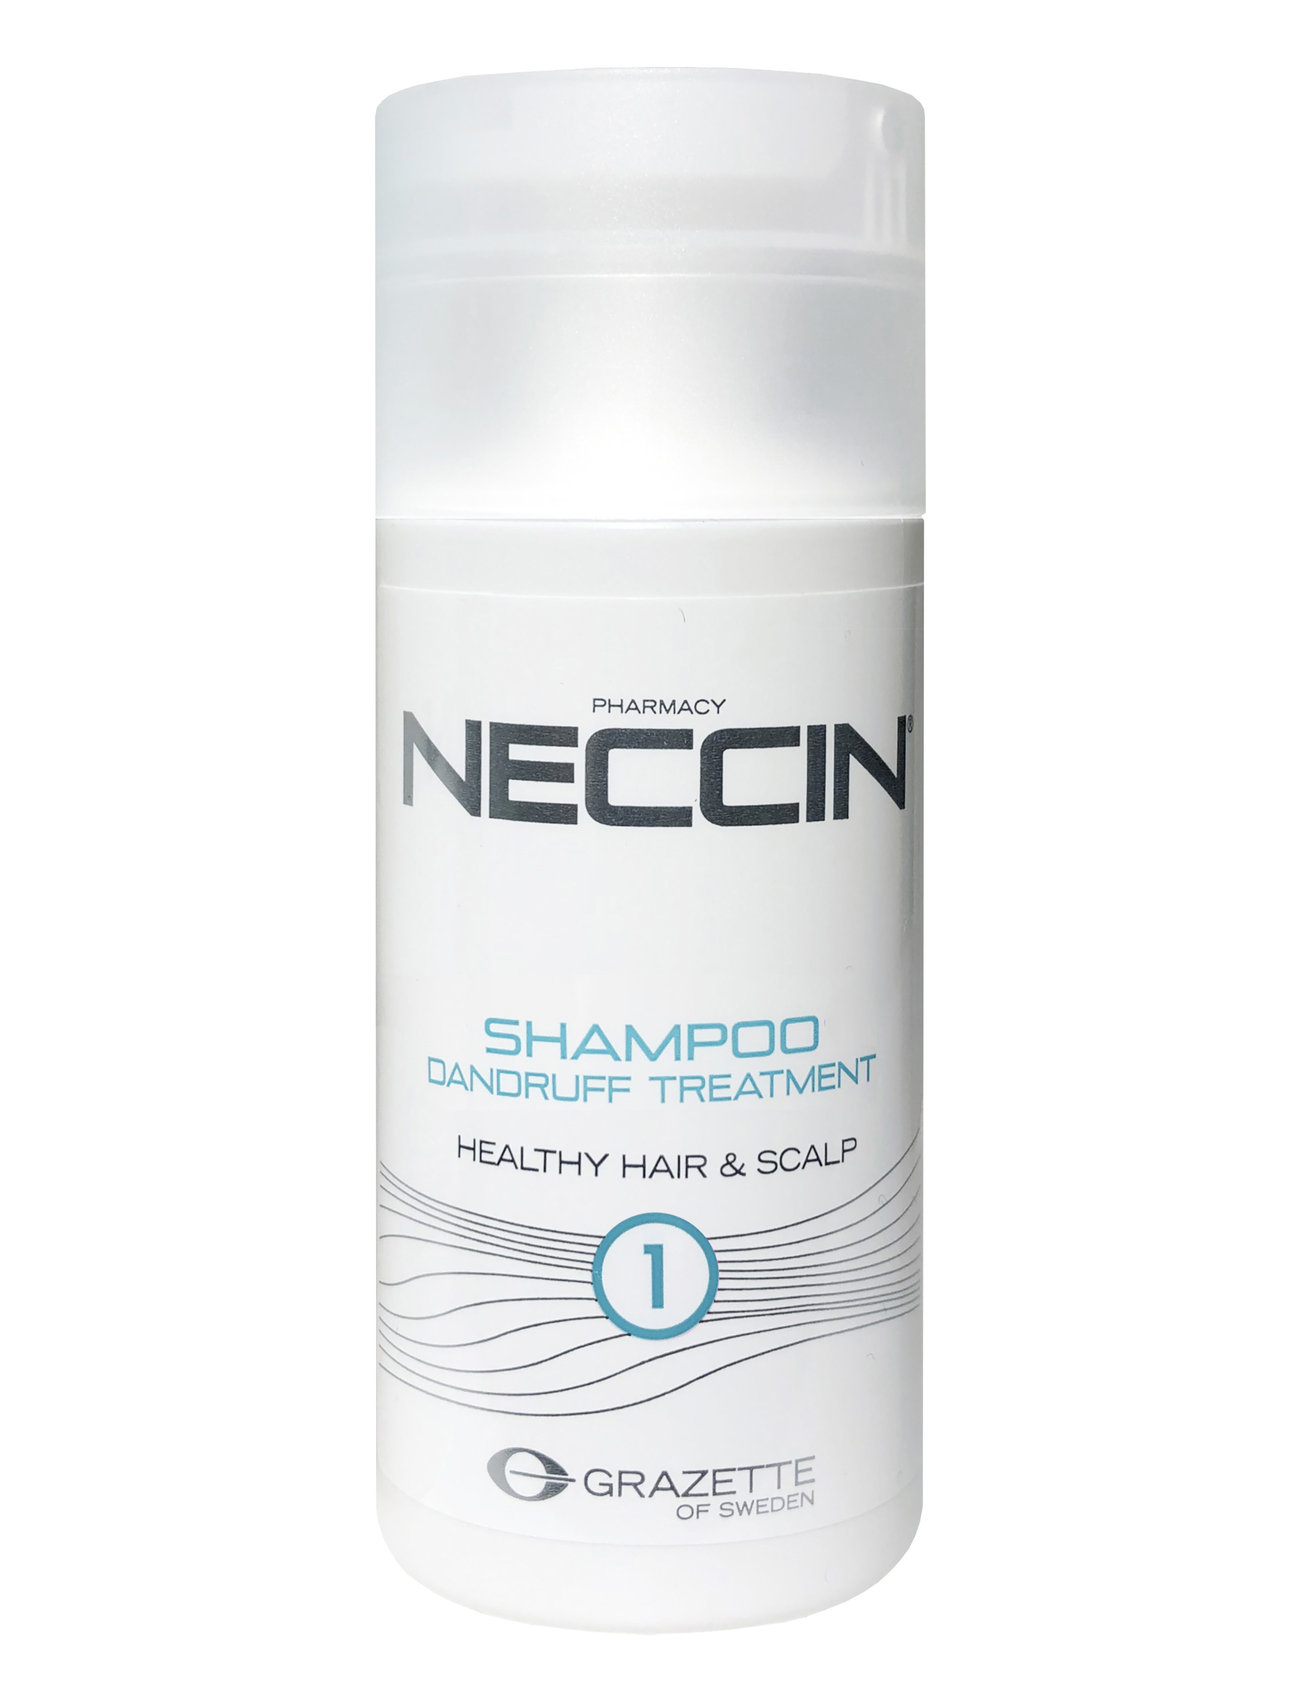 Neccin 1 Shampoo Dandruff/treatment - Shampoo Boozt.com